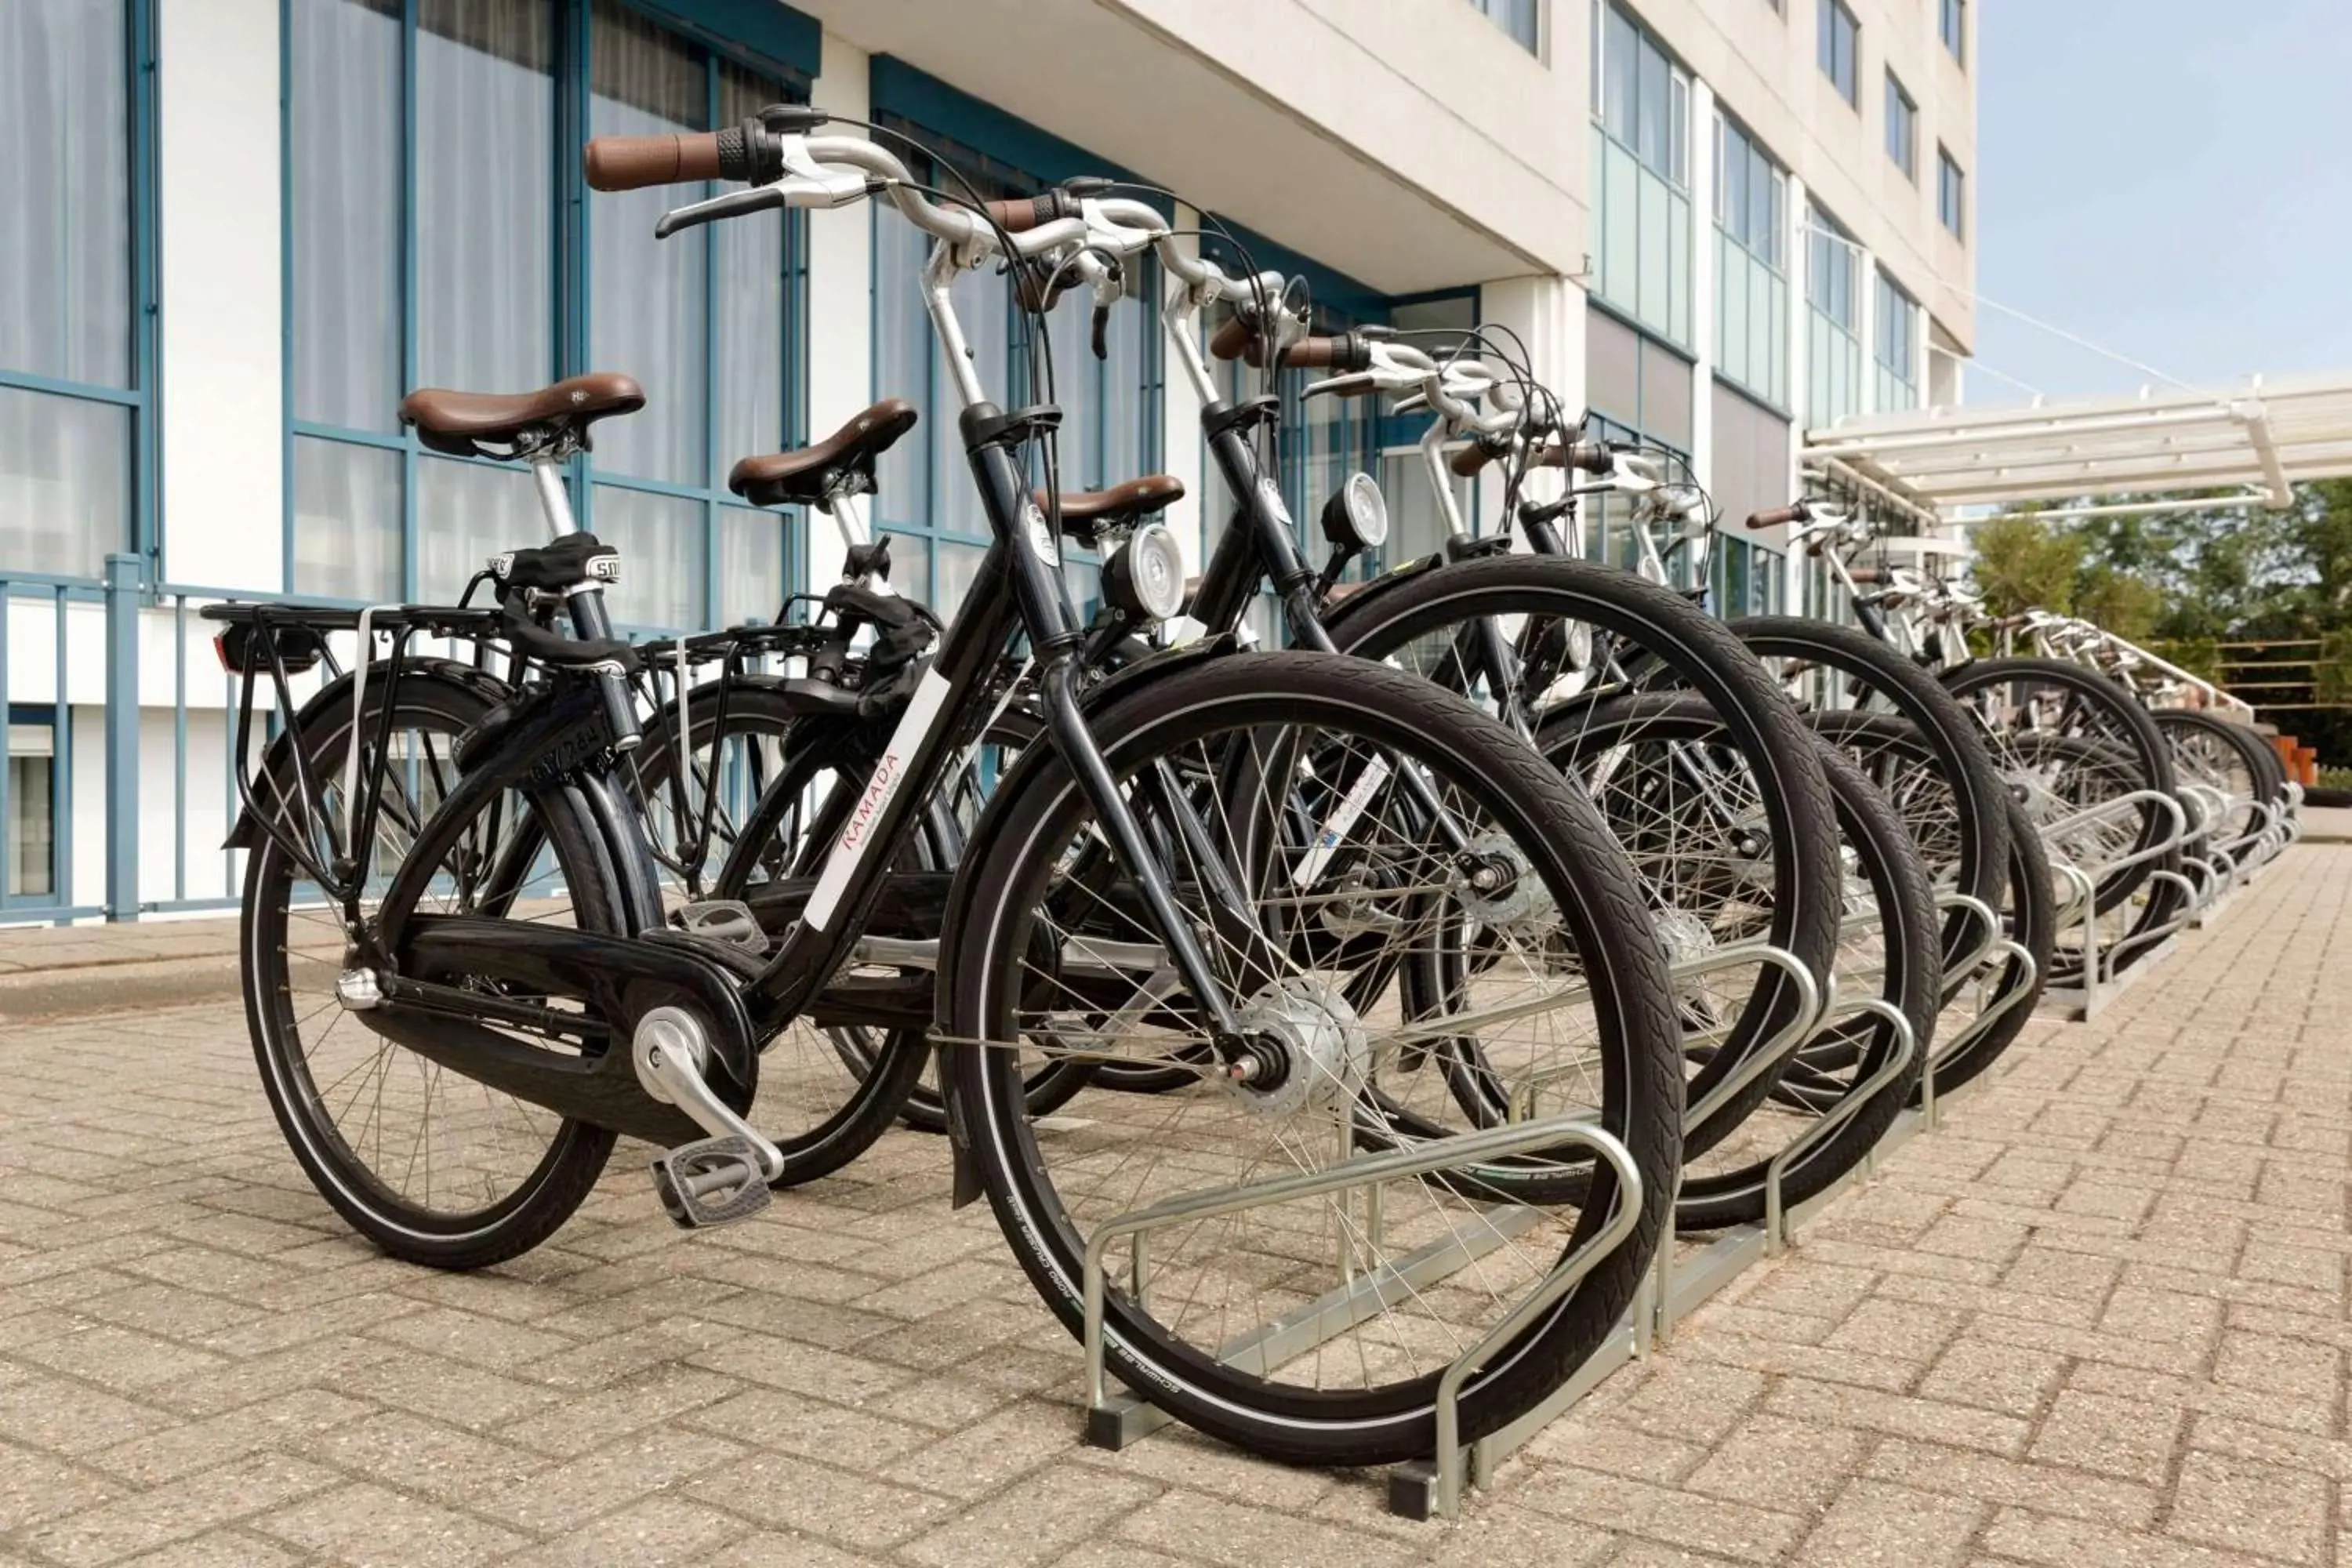 On site, Biking in Ramada by Wyndham Amsterdam Airport Schiphol